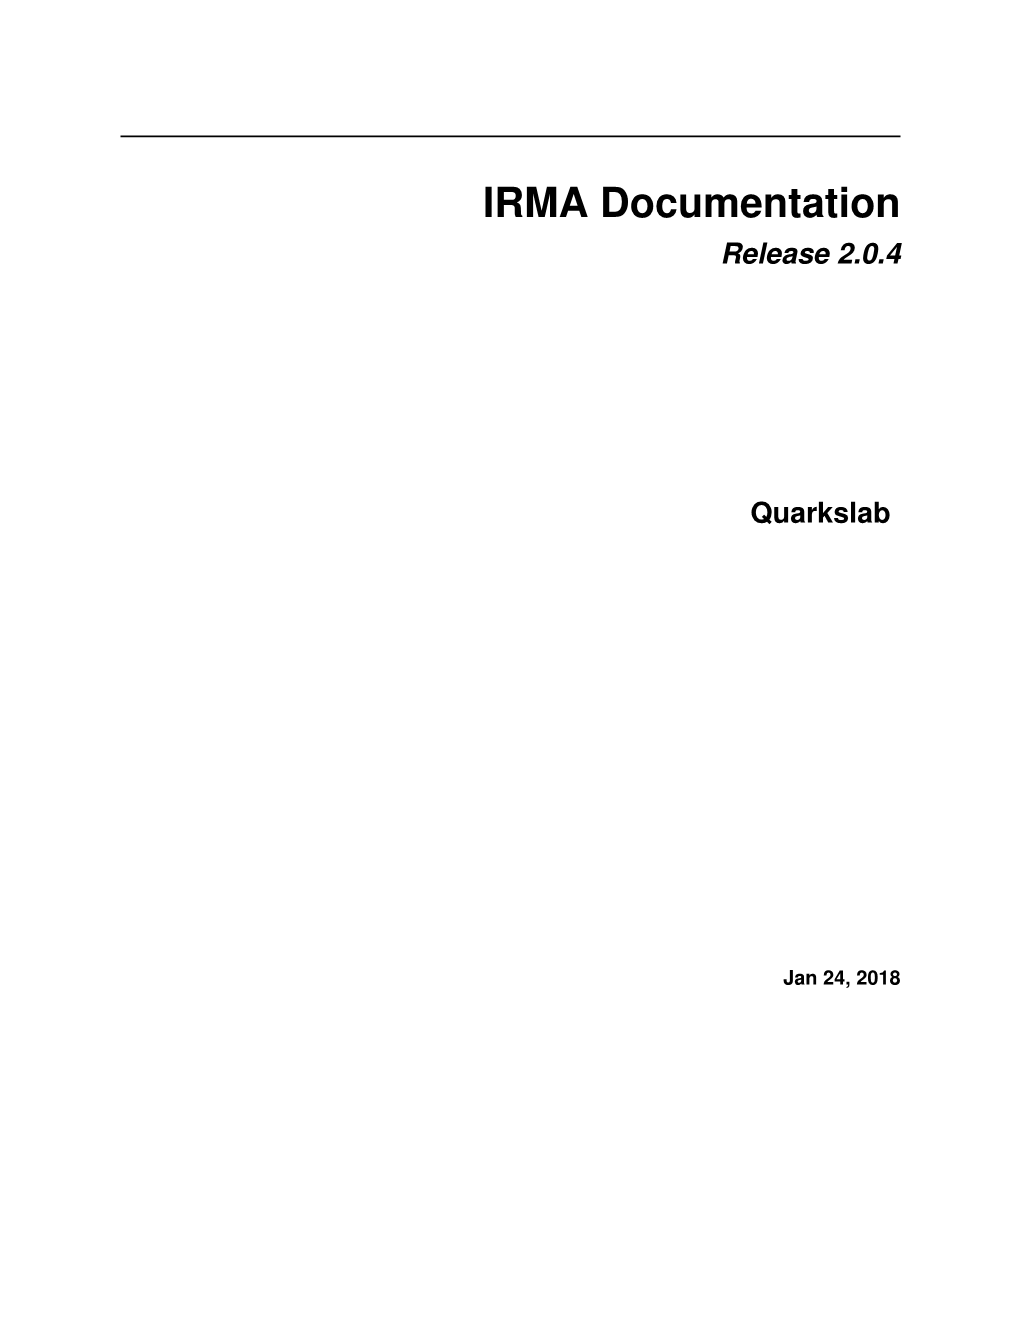 IRMA Documentation Release 2.0.4